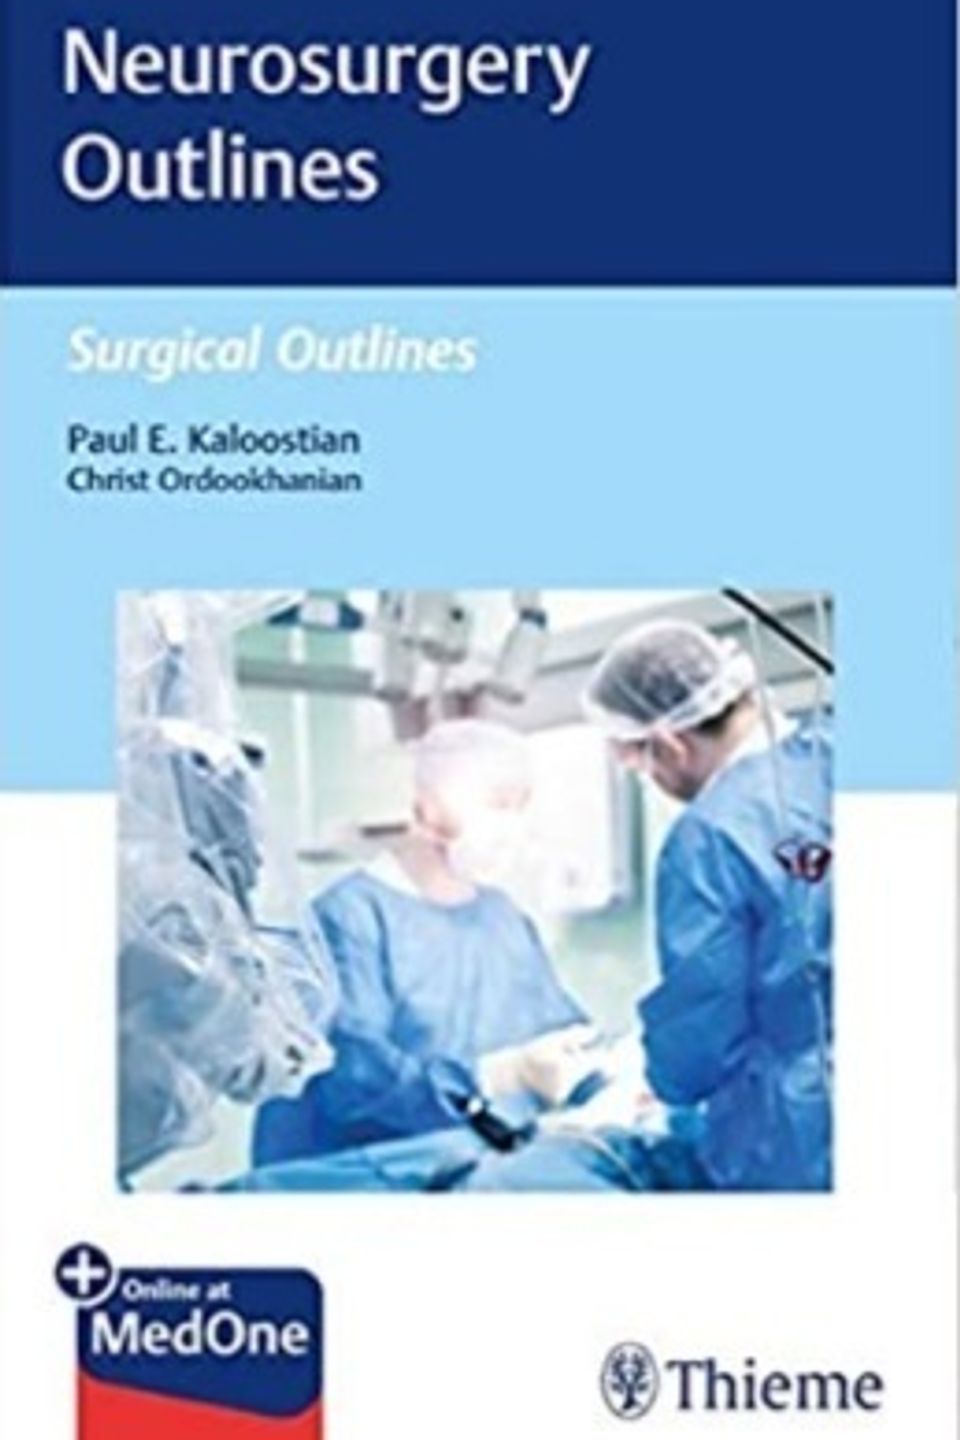 Neurosurgery outlines